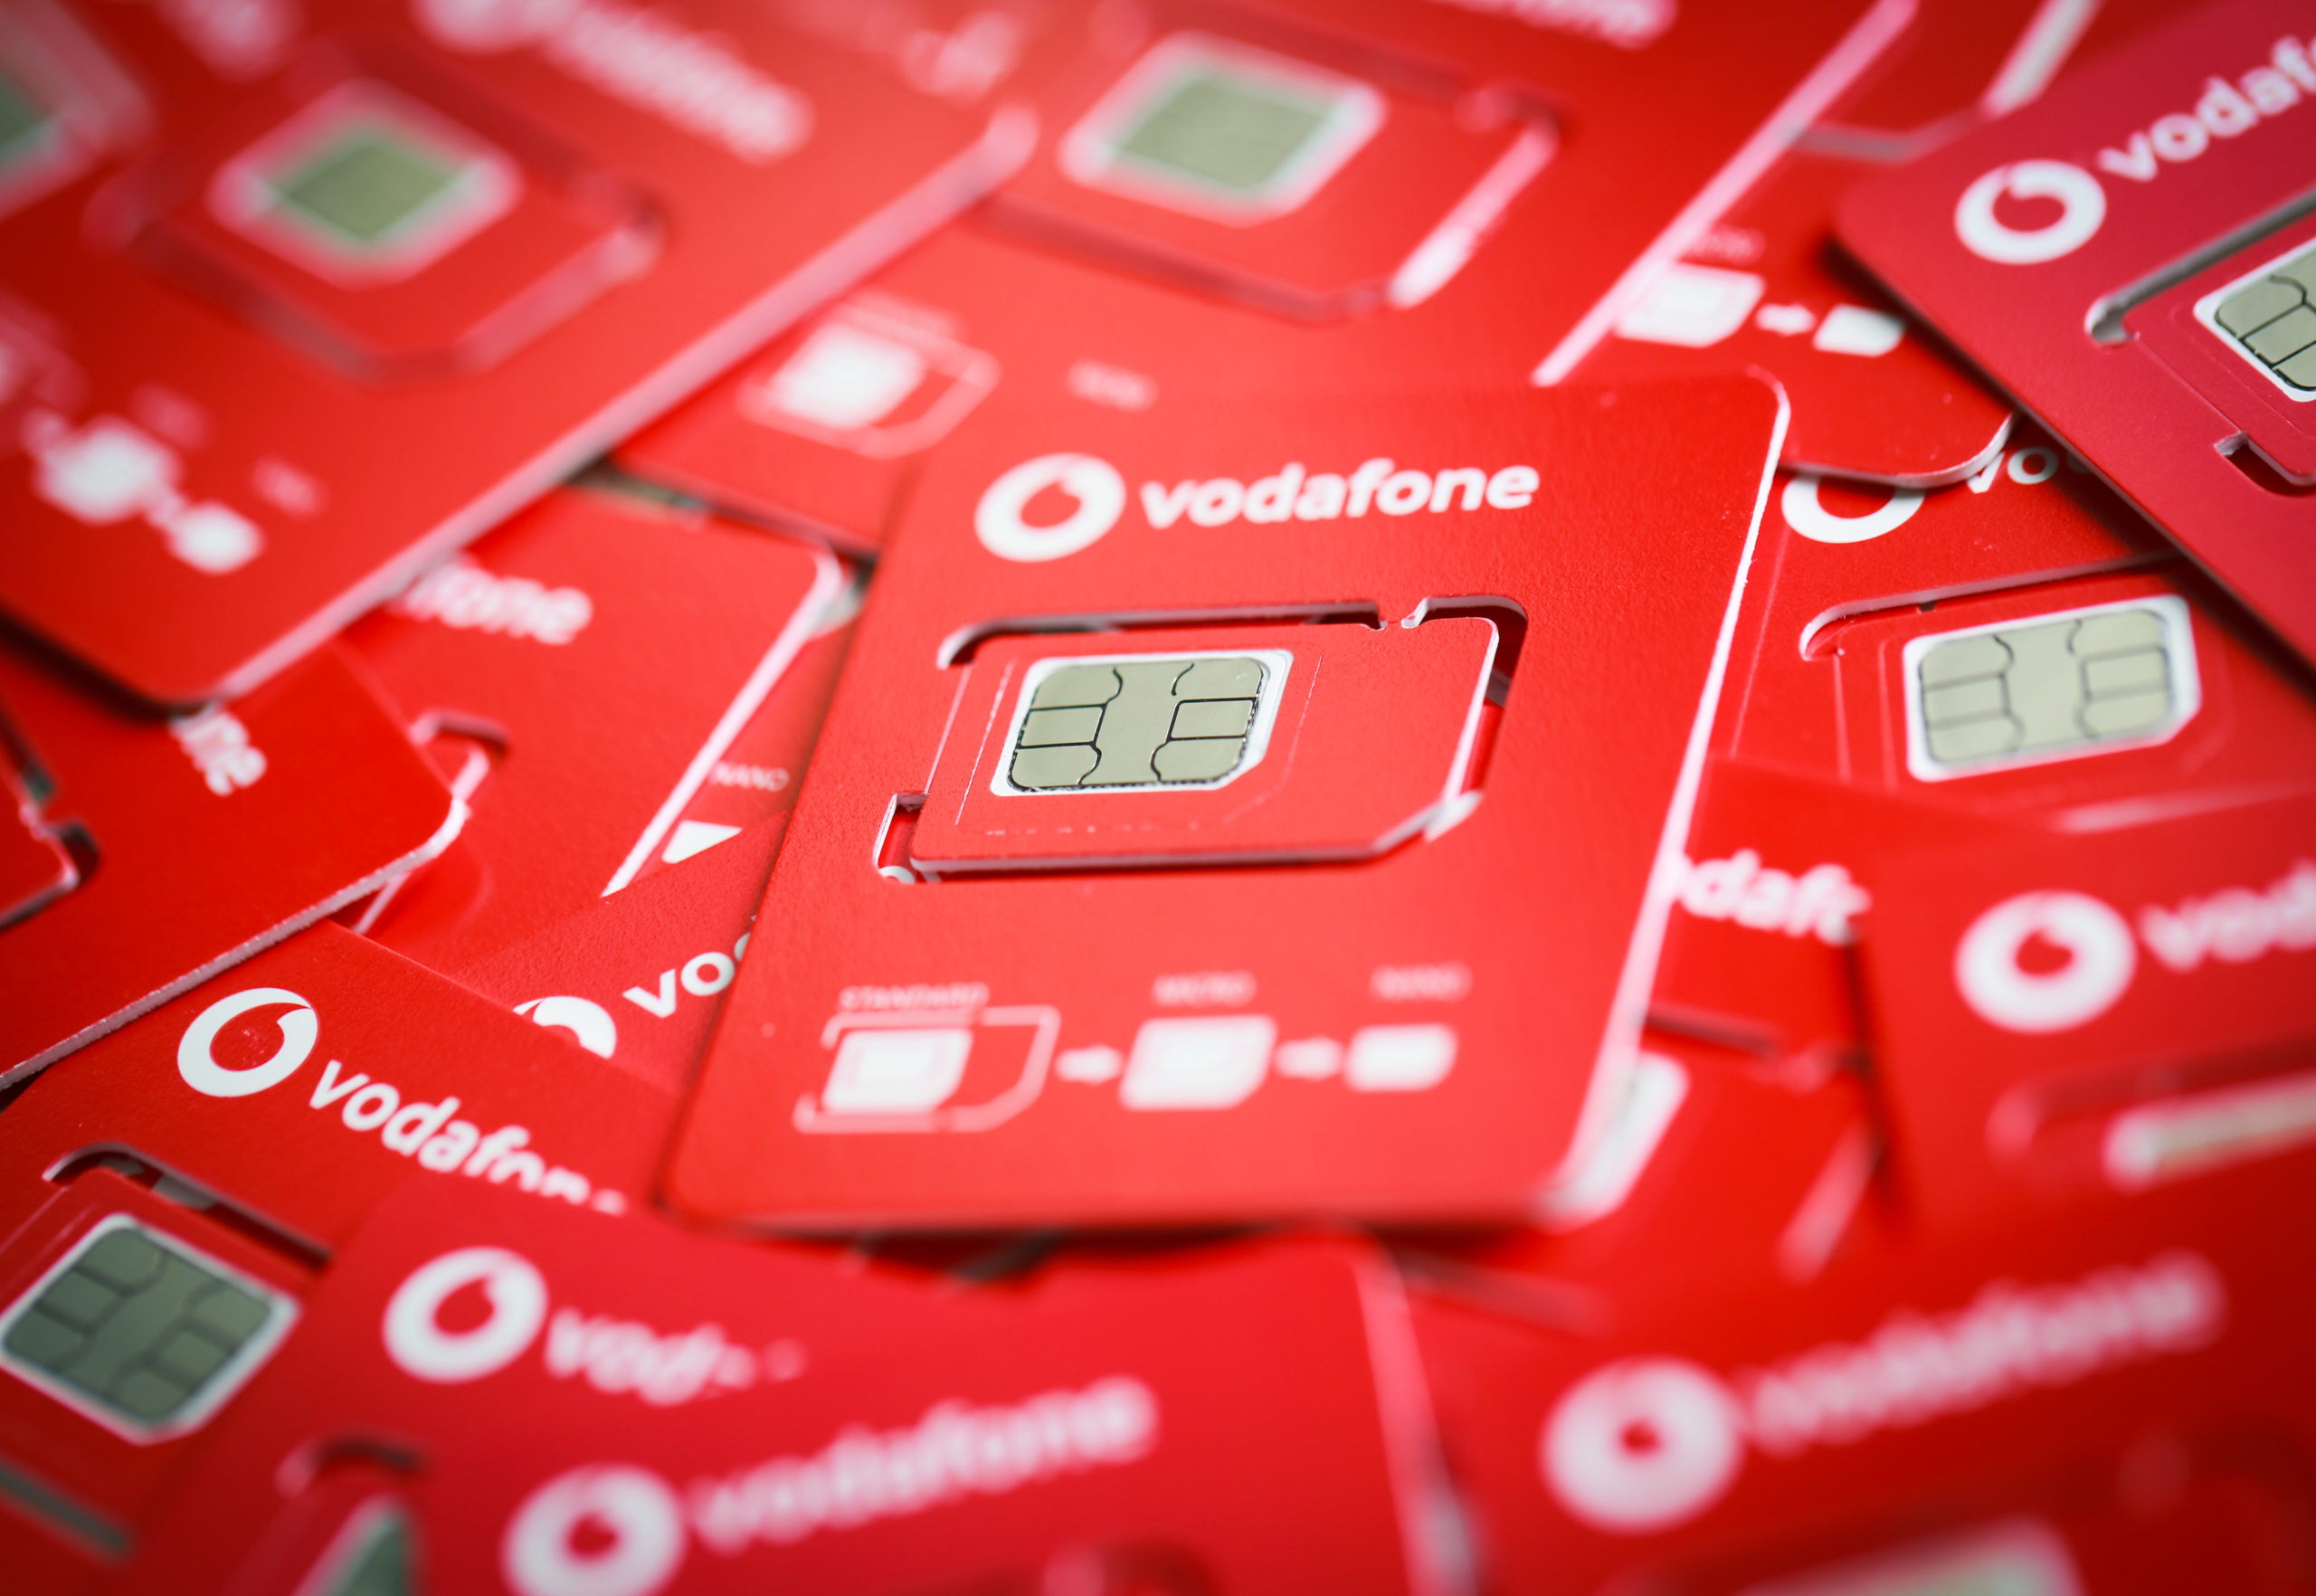 How Vodafone modernized legacy architecture with Camunda